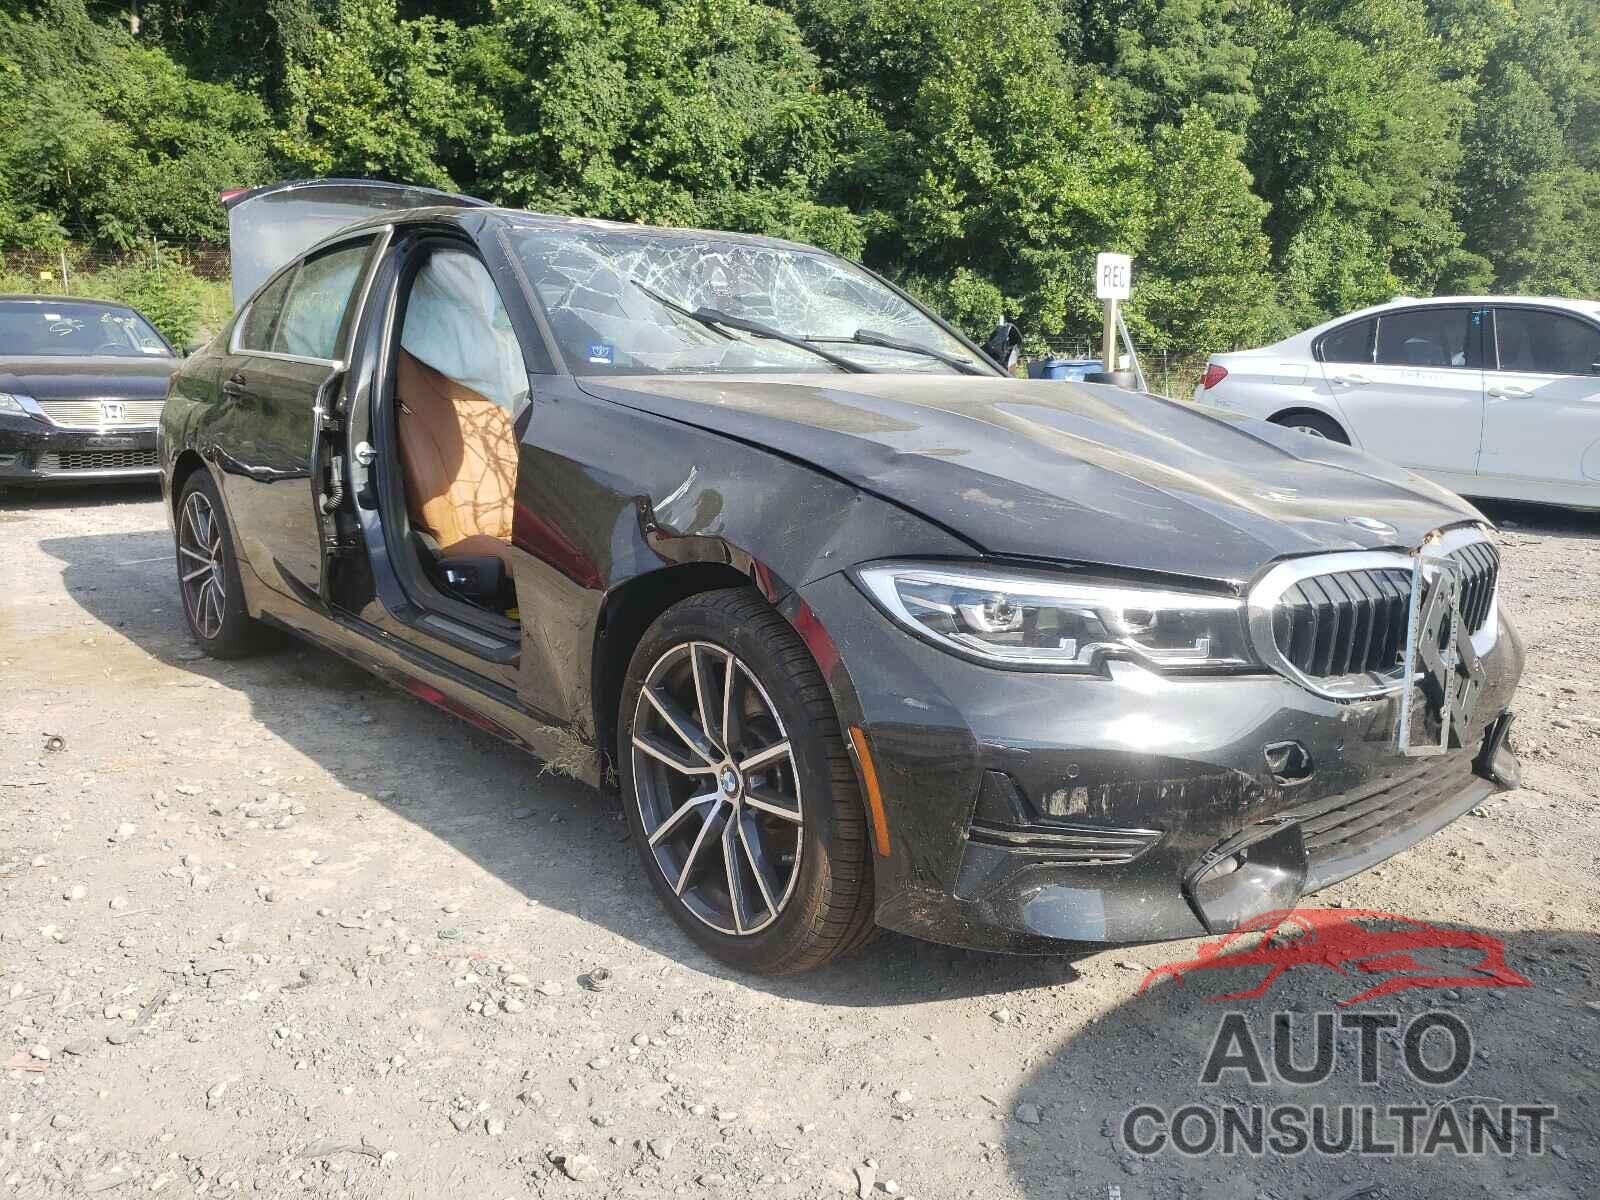 BMW 3 SERIES 2019 - WBA5R7C55KFH12340